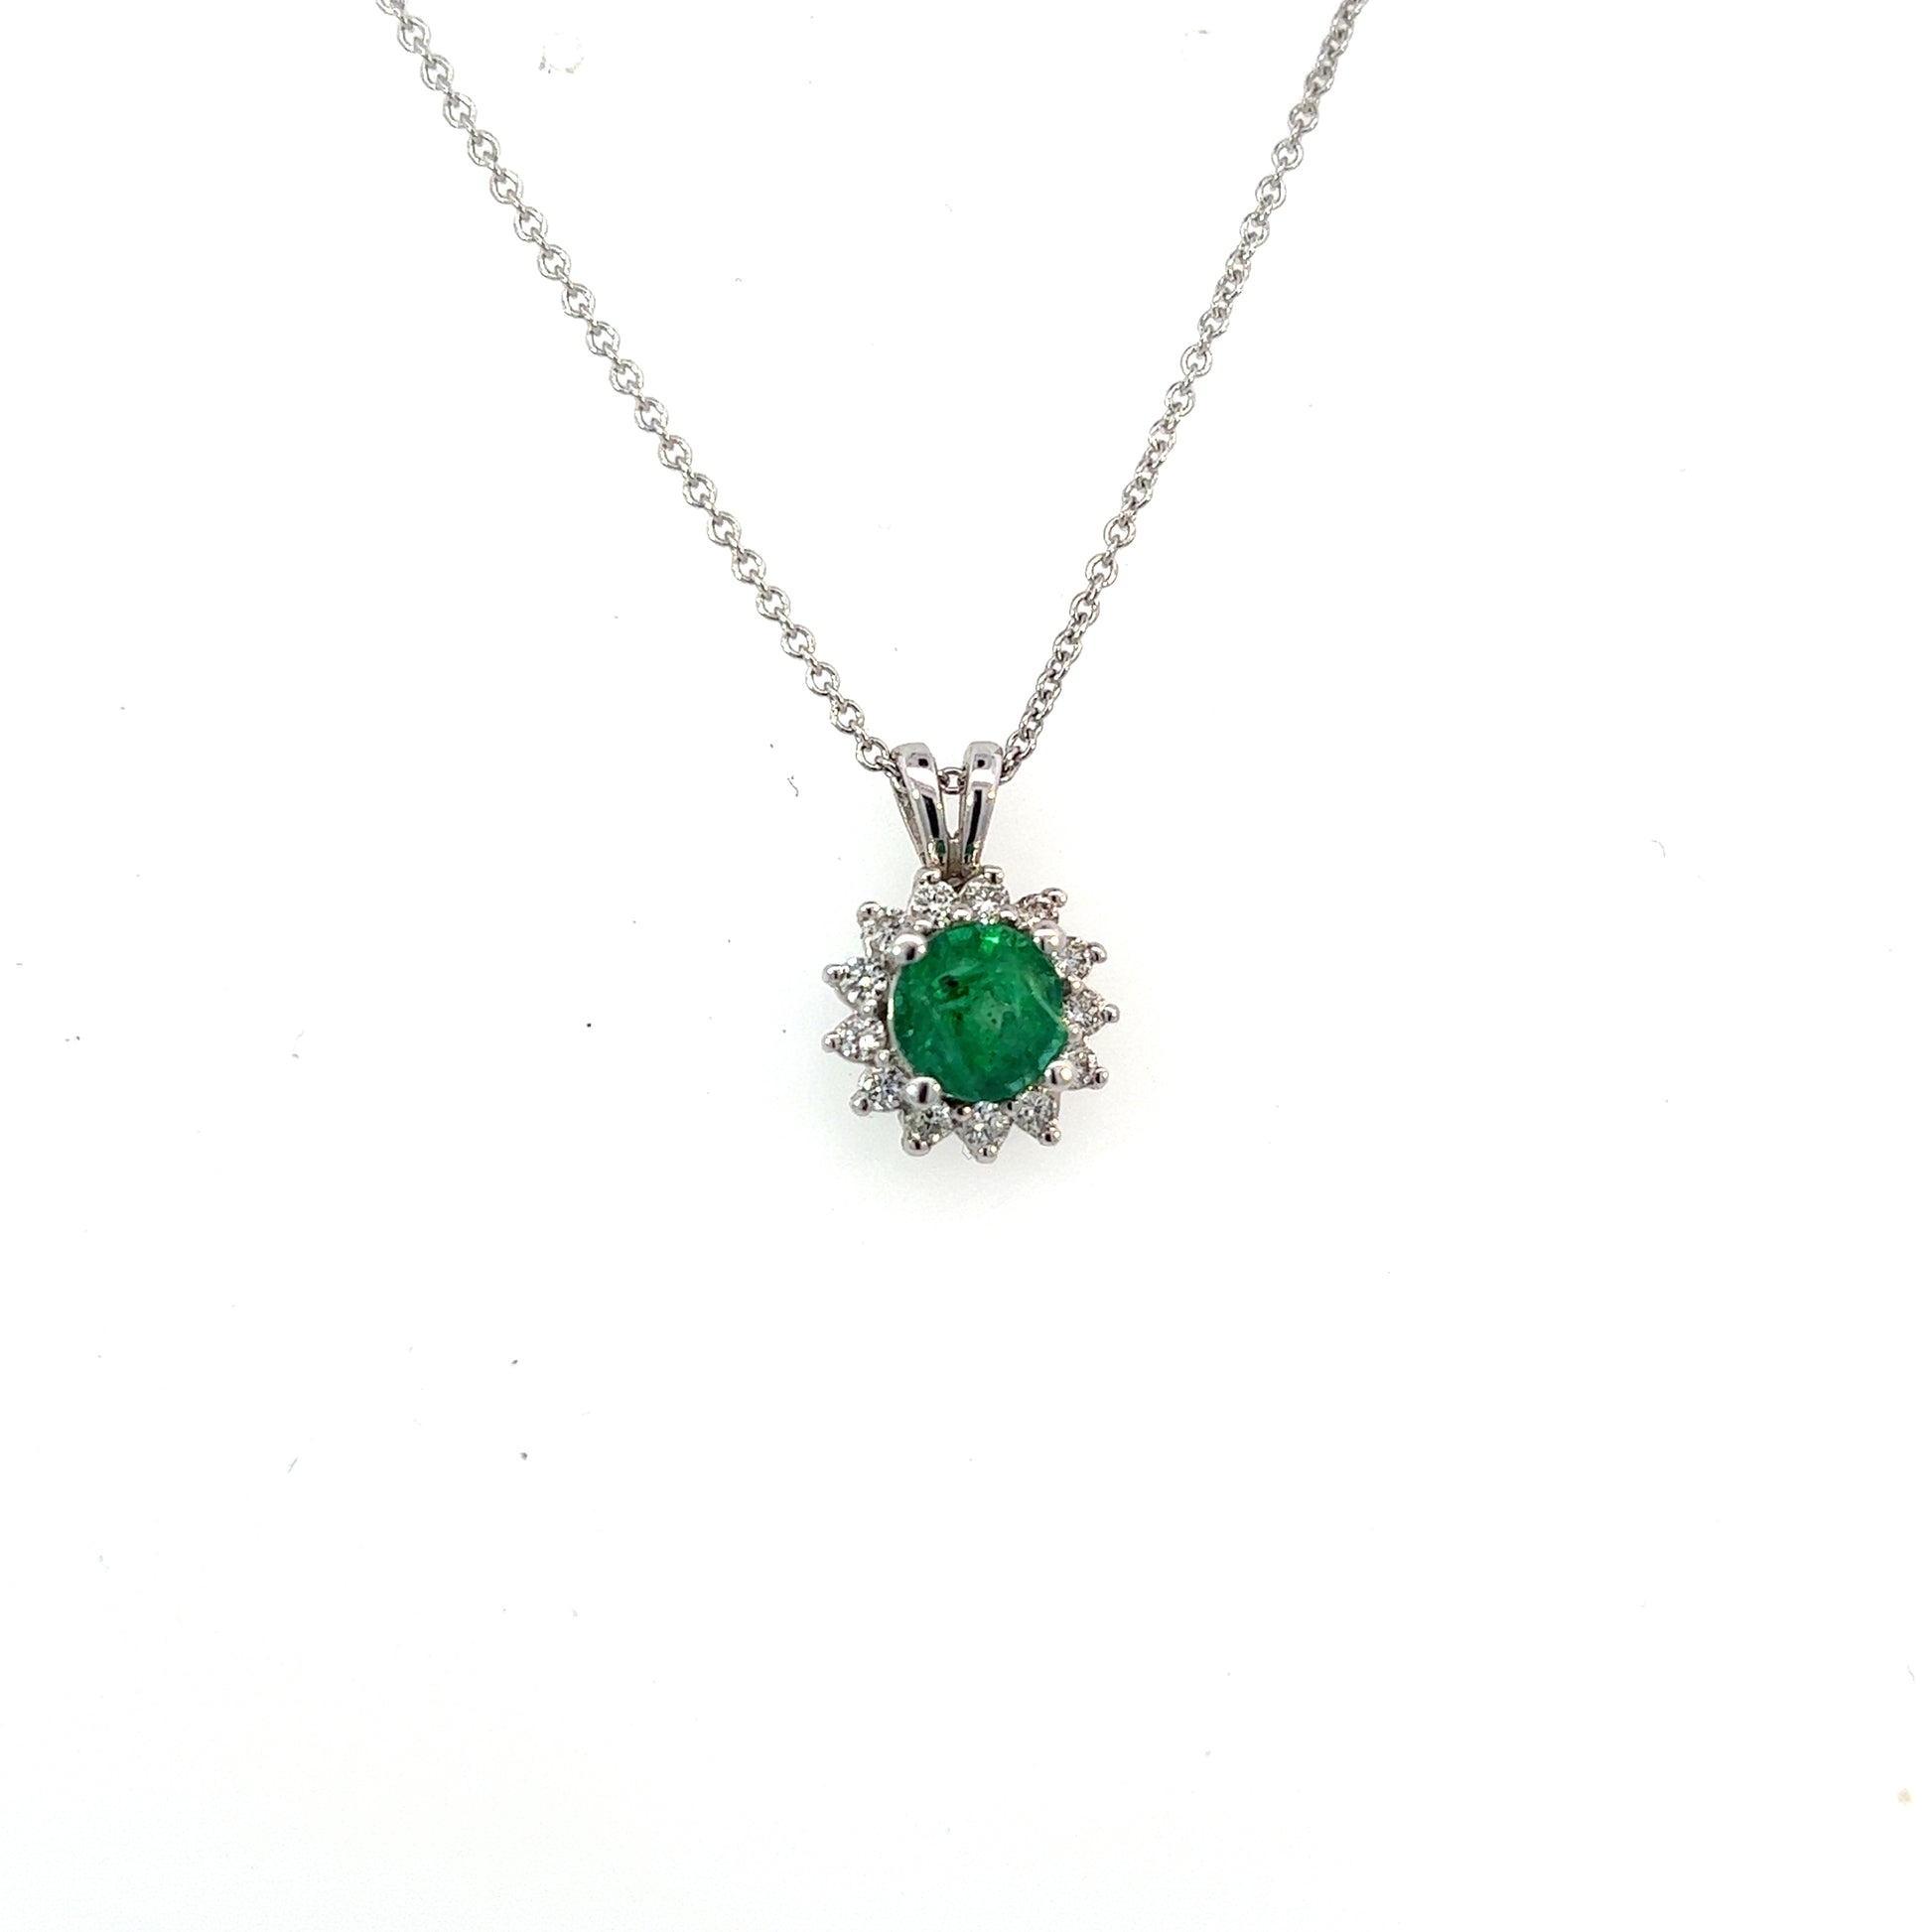 Natural Emerald Diamond Pendant With Chain 17.5" 14k WG 1.35 TCW Certified $4,975 216665 - Certified Fine Jewelry